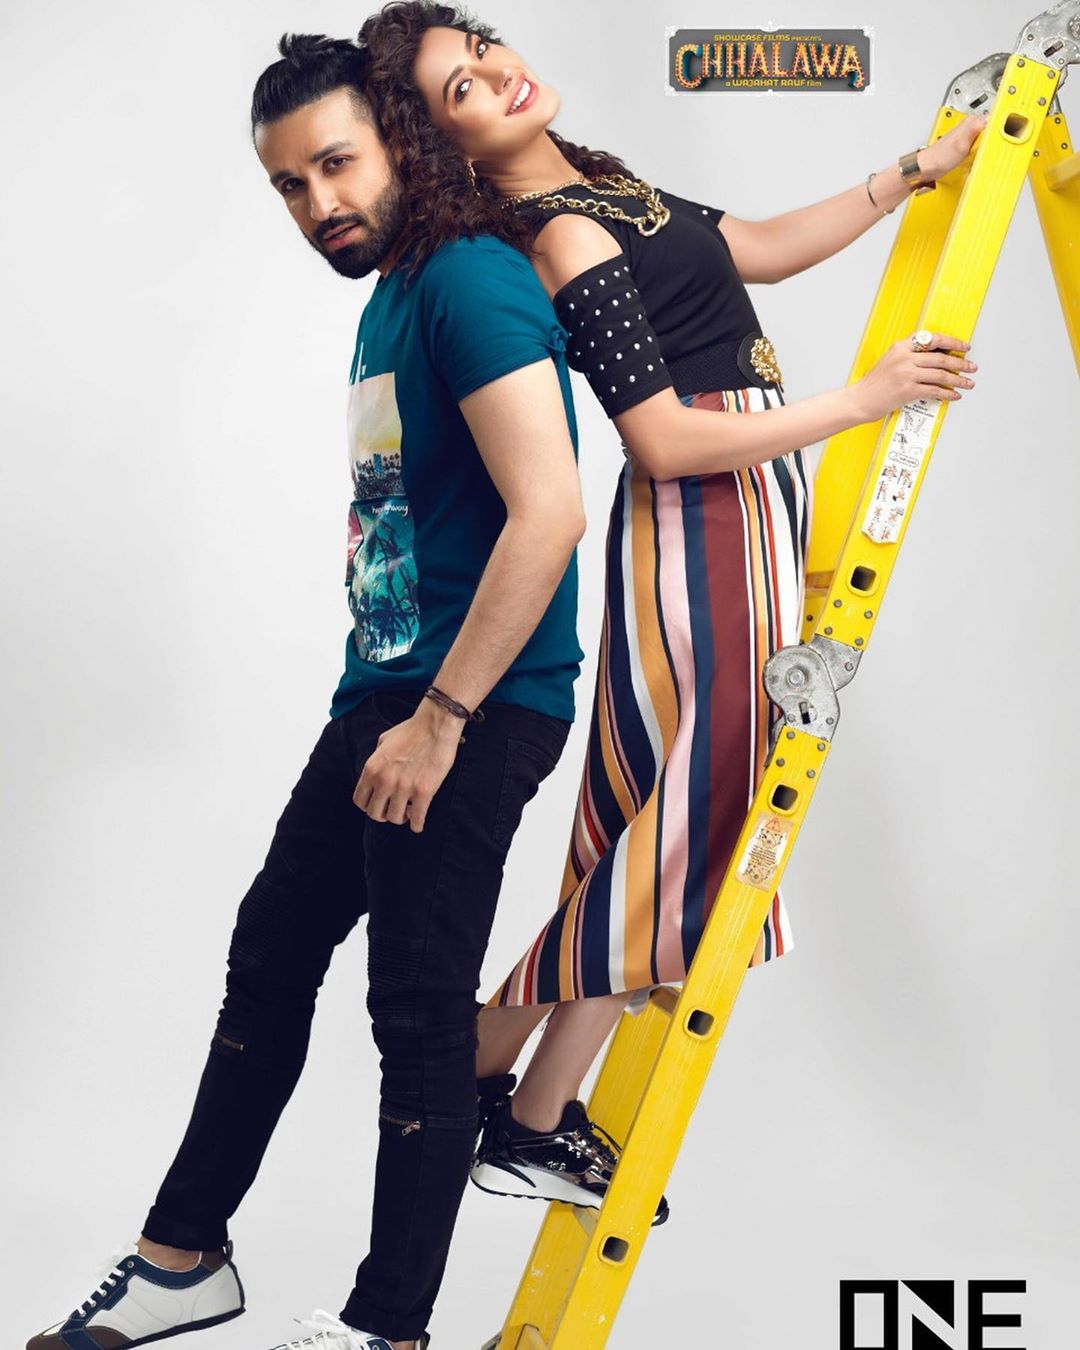 Mehwish Hayat & Azfar Rehman Photoshoot for a Clothing Brand